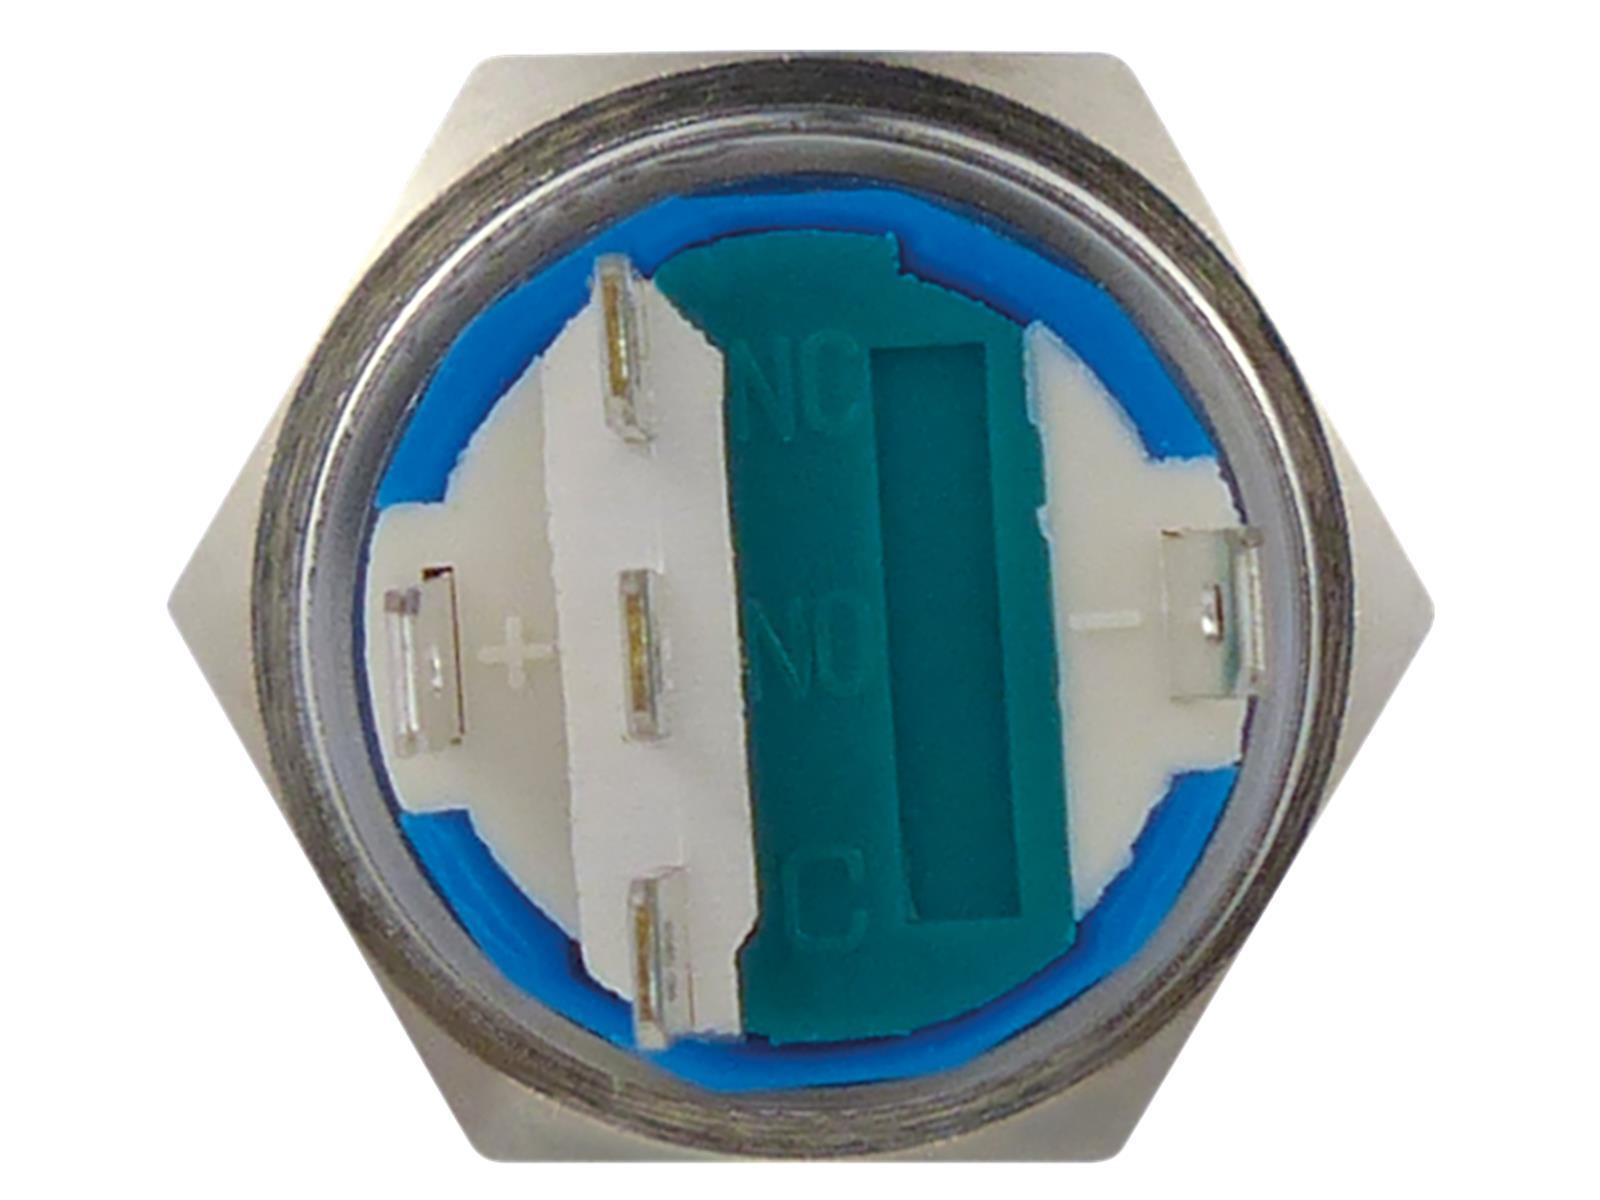 Vollmetallschalter mit Ringbeleuchtung, rot, 19mm-Ø, 250V, 5A, Lötanschluss